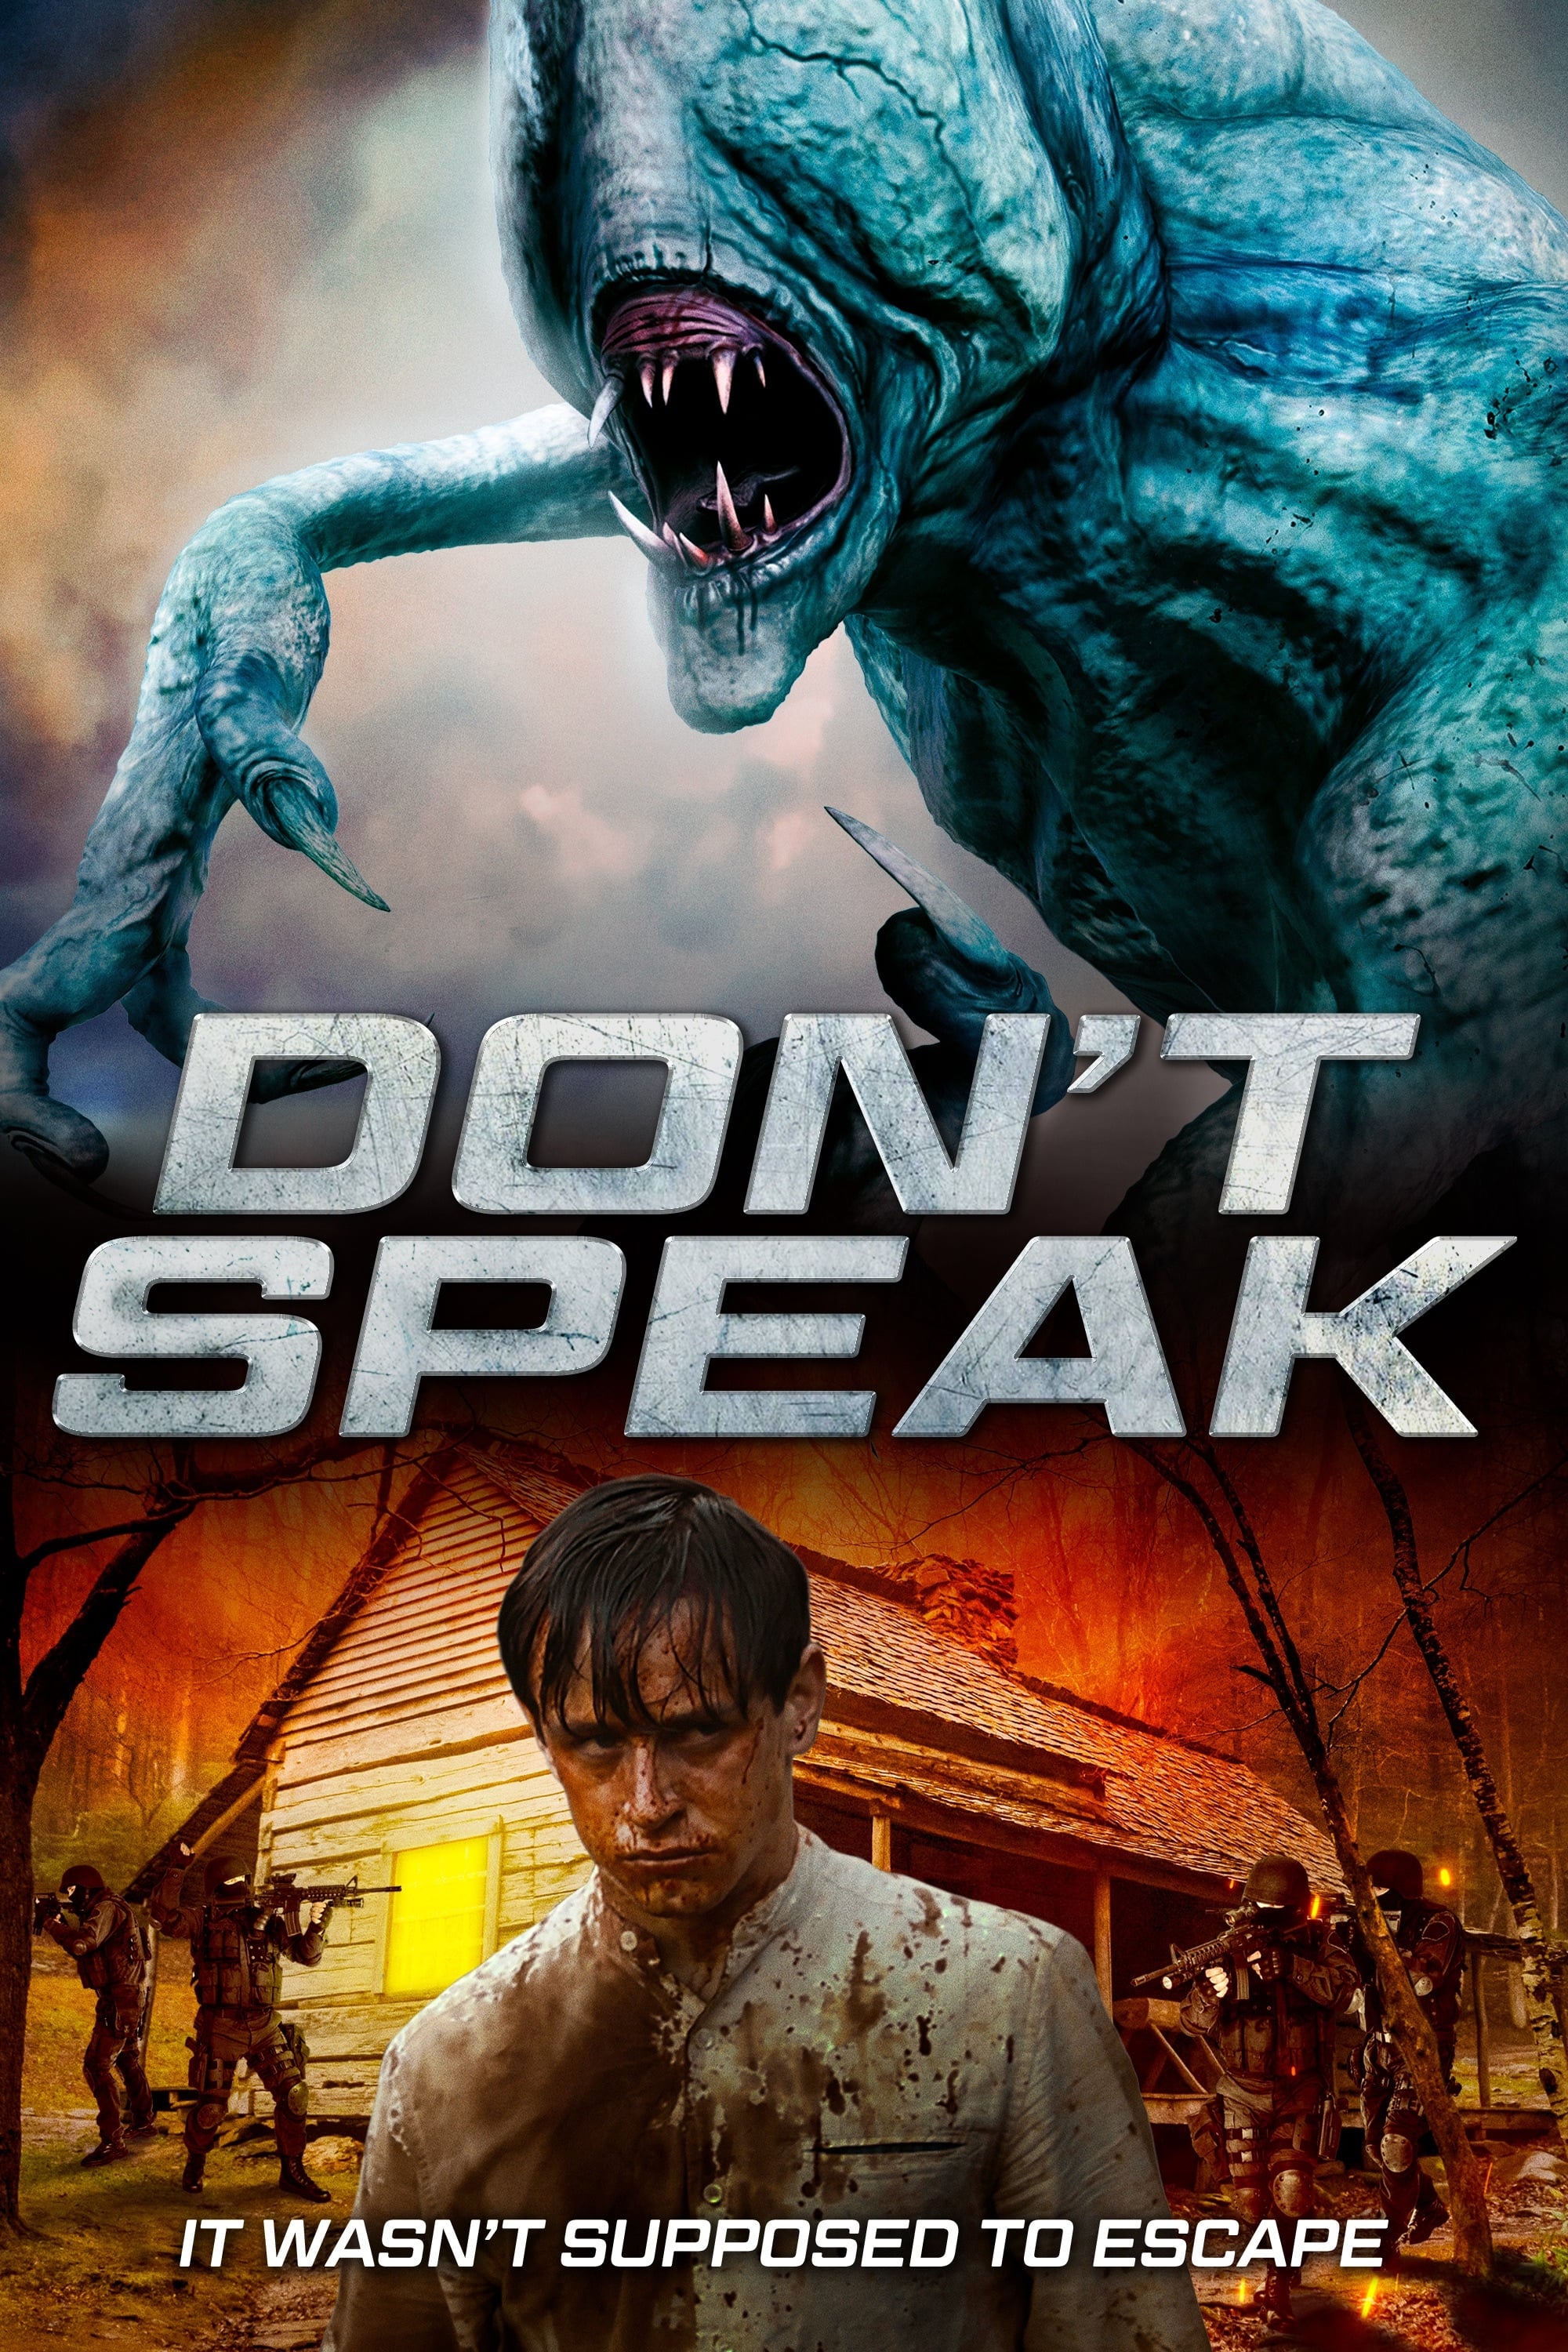 Don't Speak (2020)